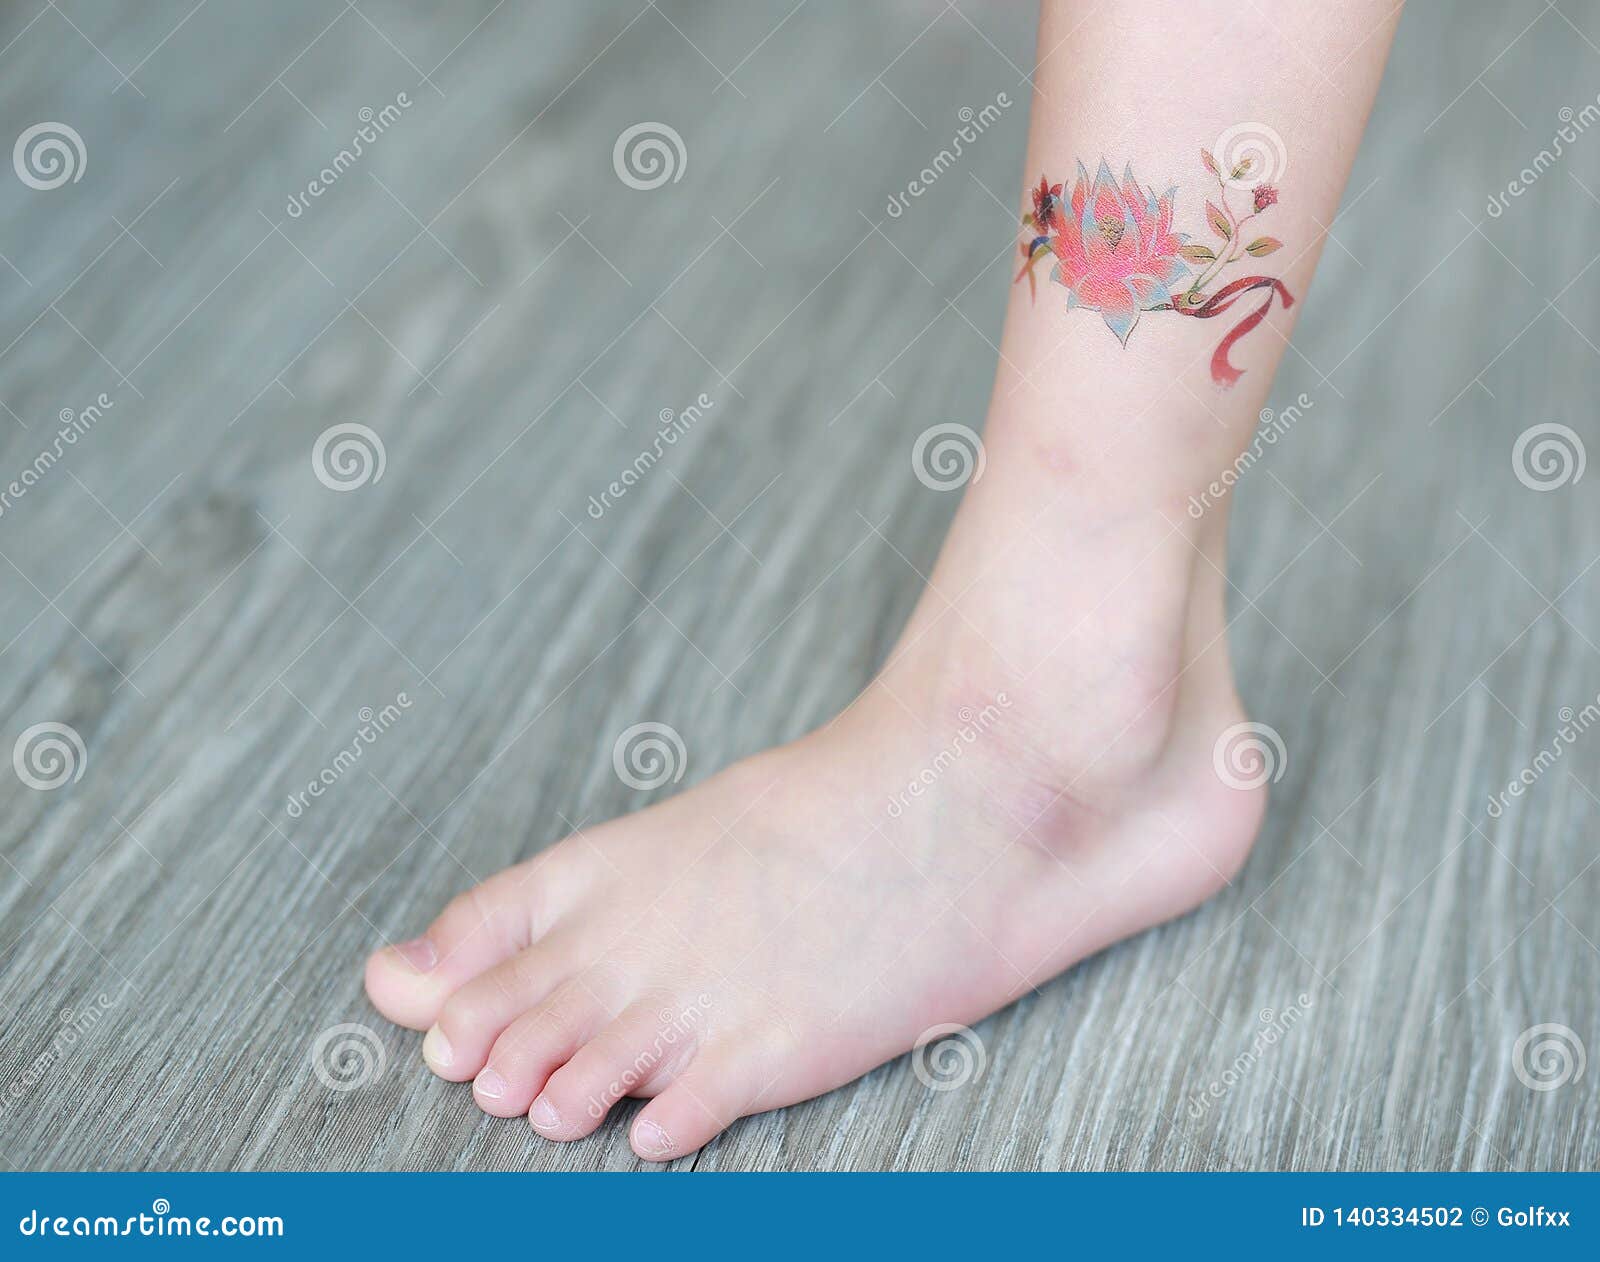 Ankle tattoos - Best Tattoo Ideas Gallery